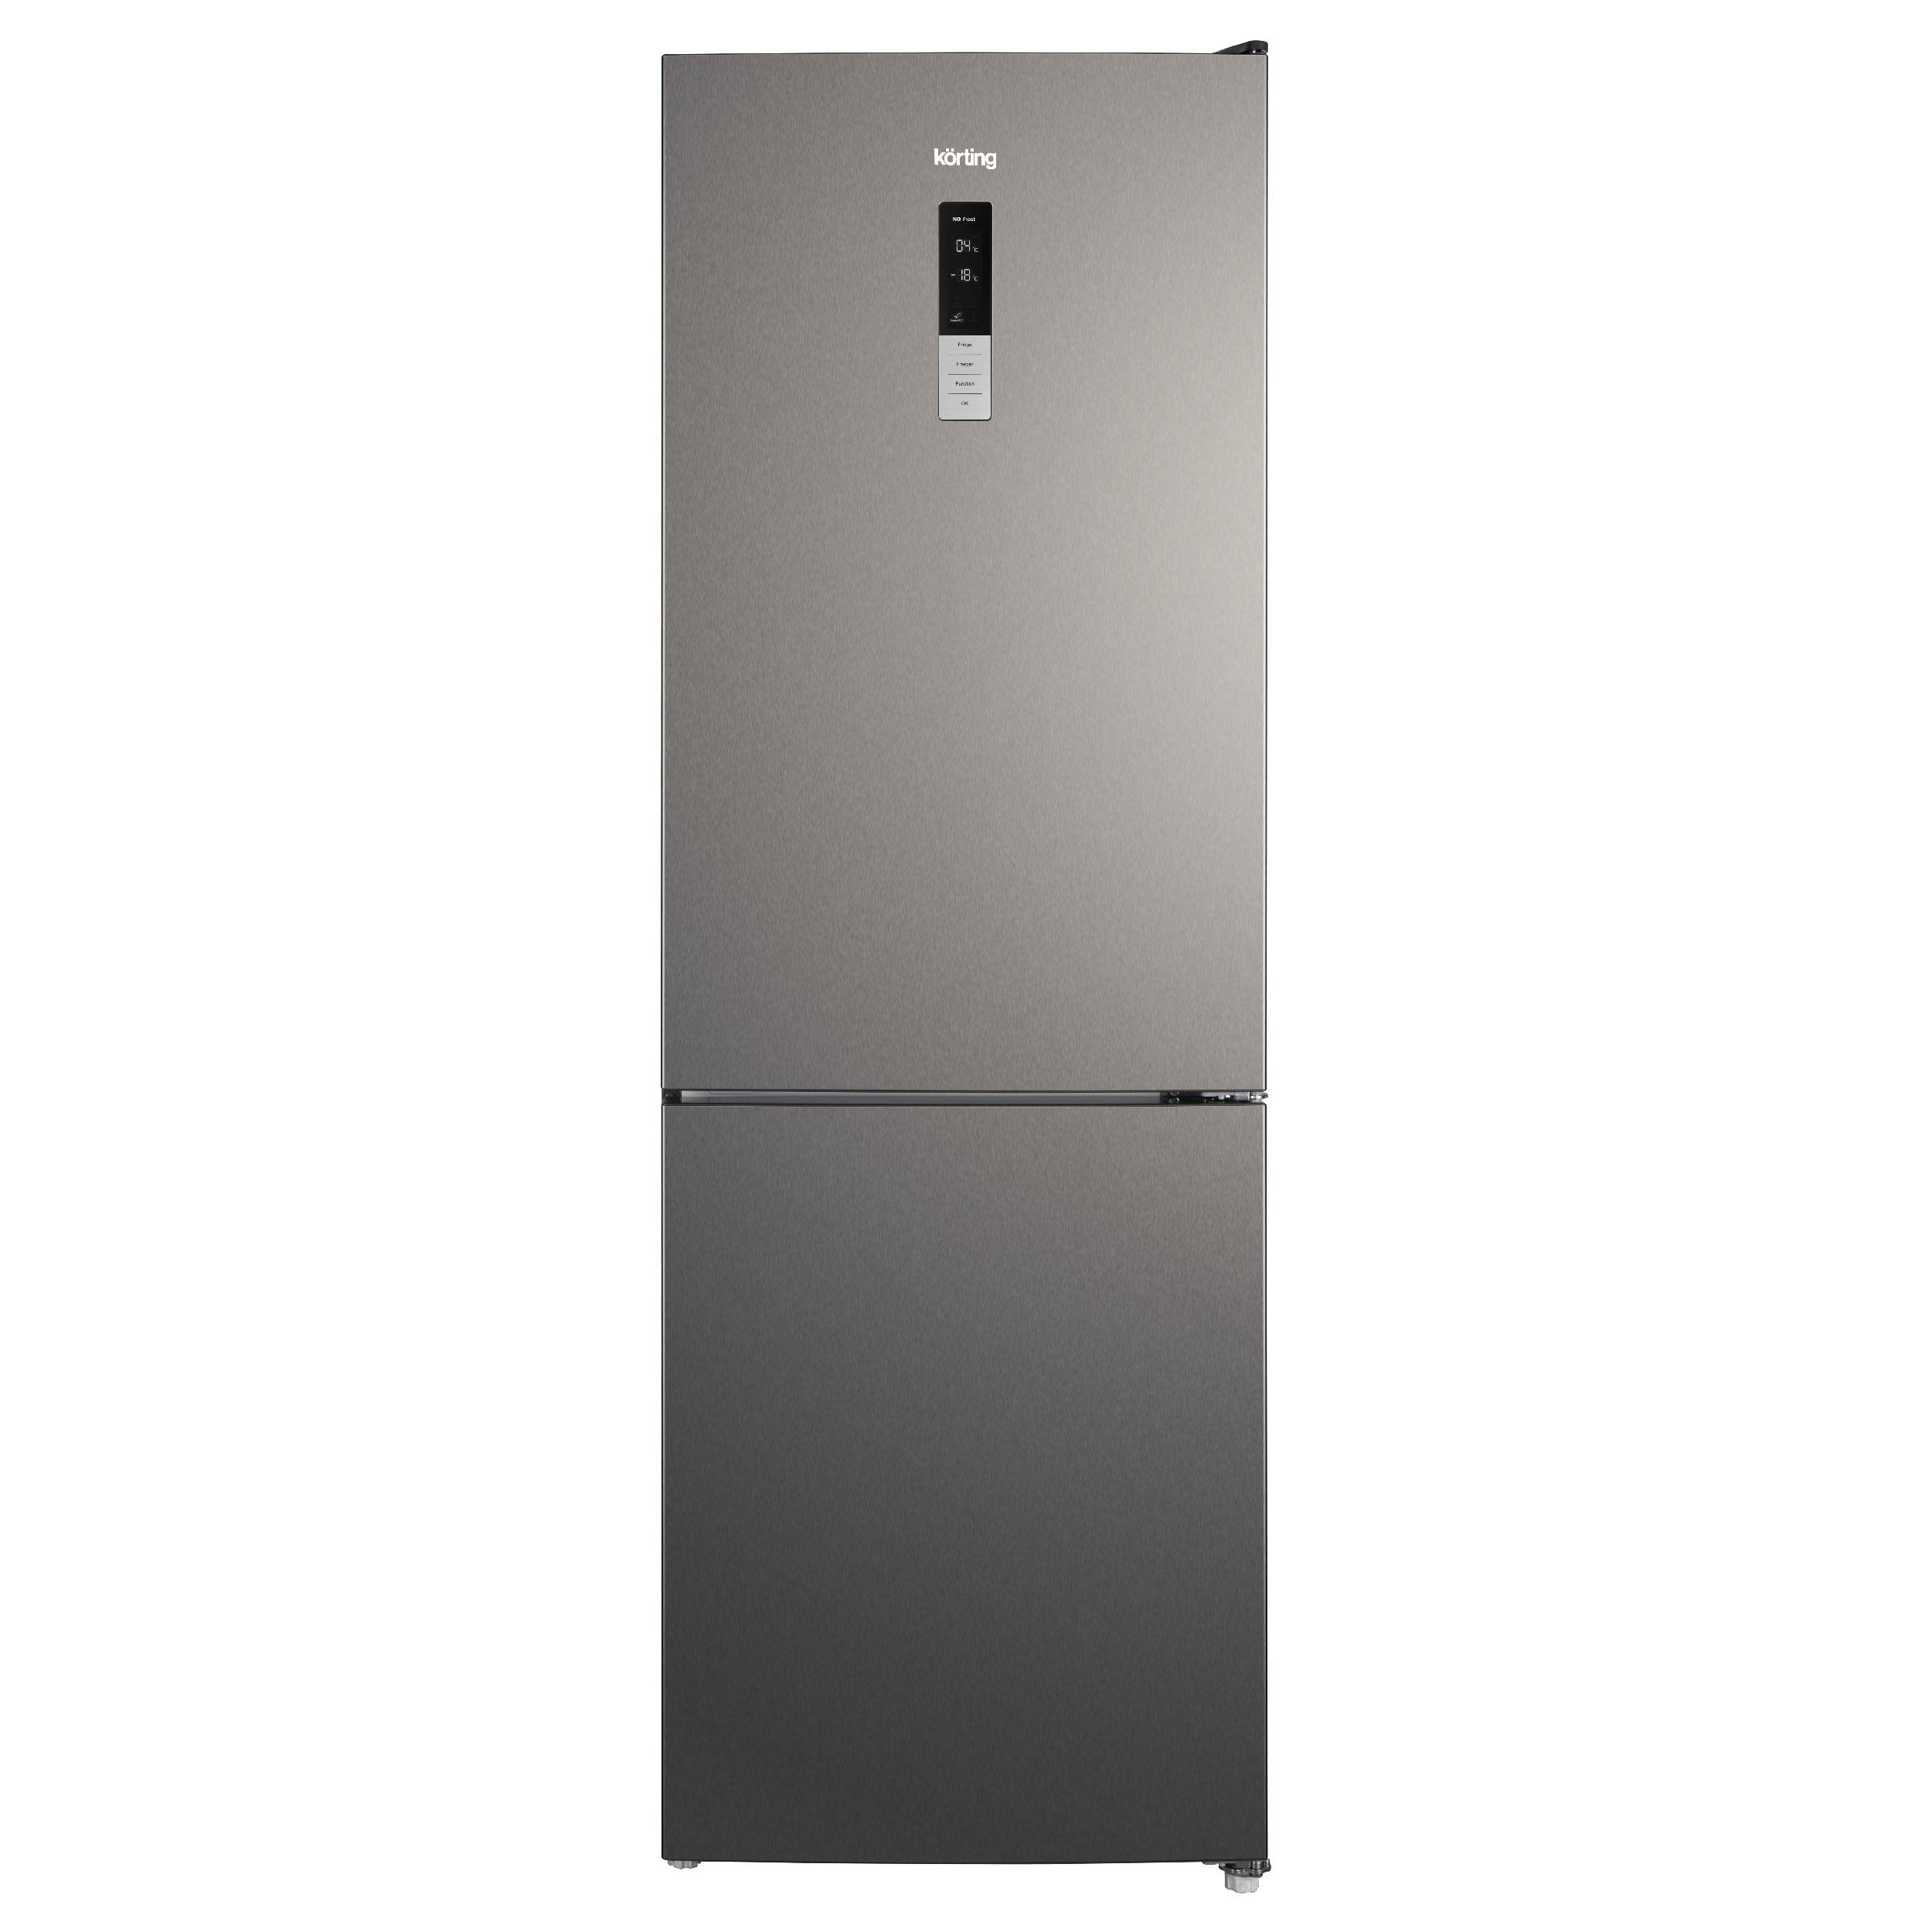 Холодильник Korting KNFC 61869 X серебристый, серый холодильник korting knfs 91797 gn